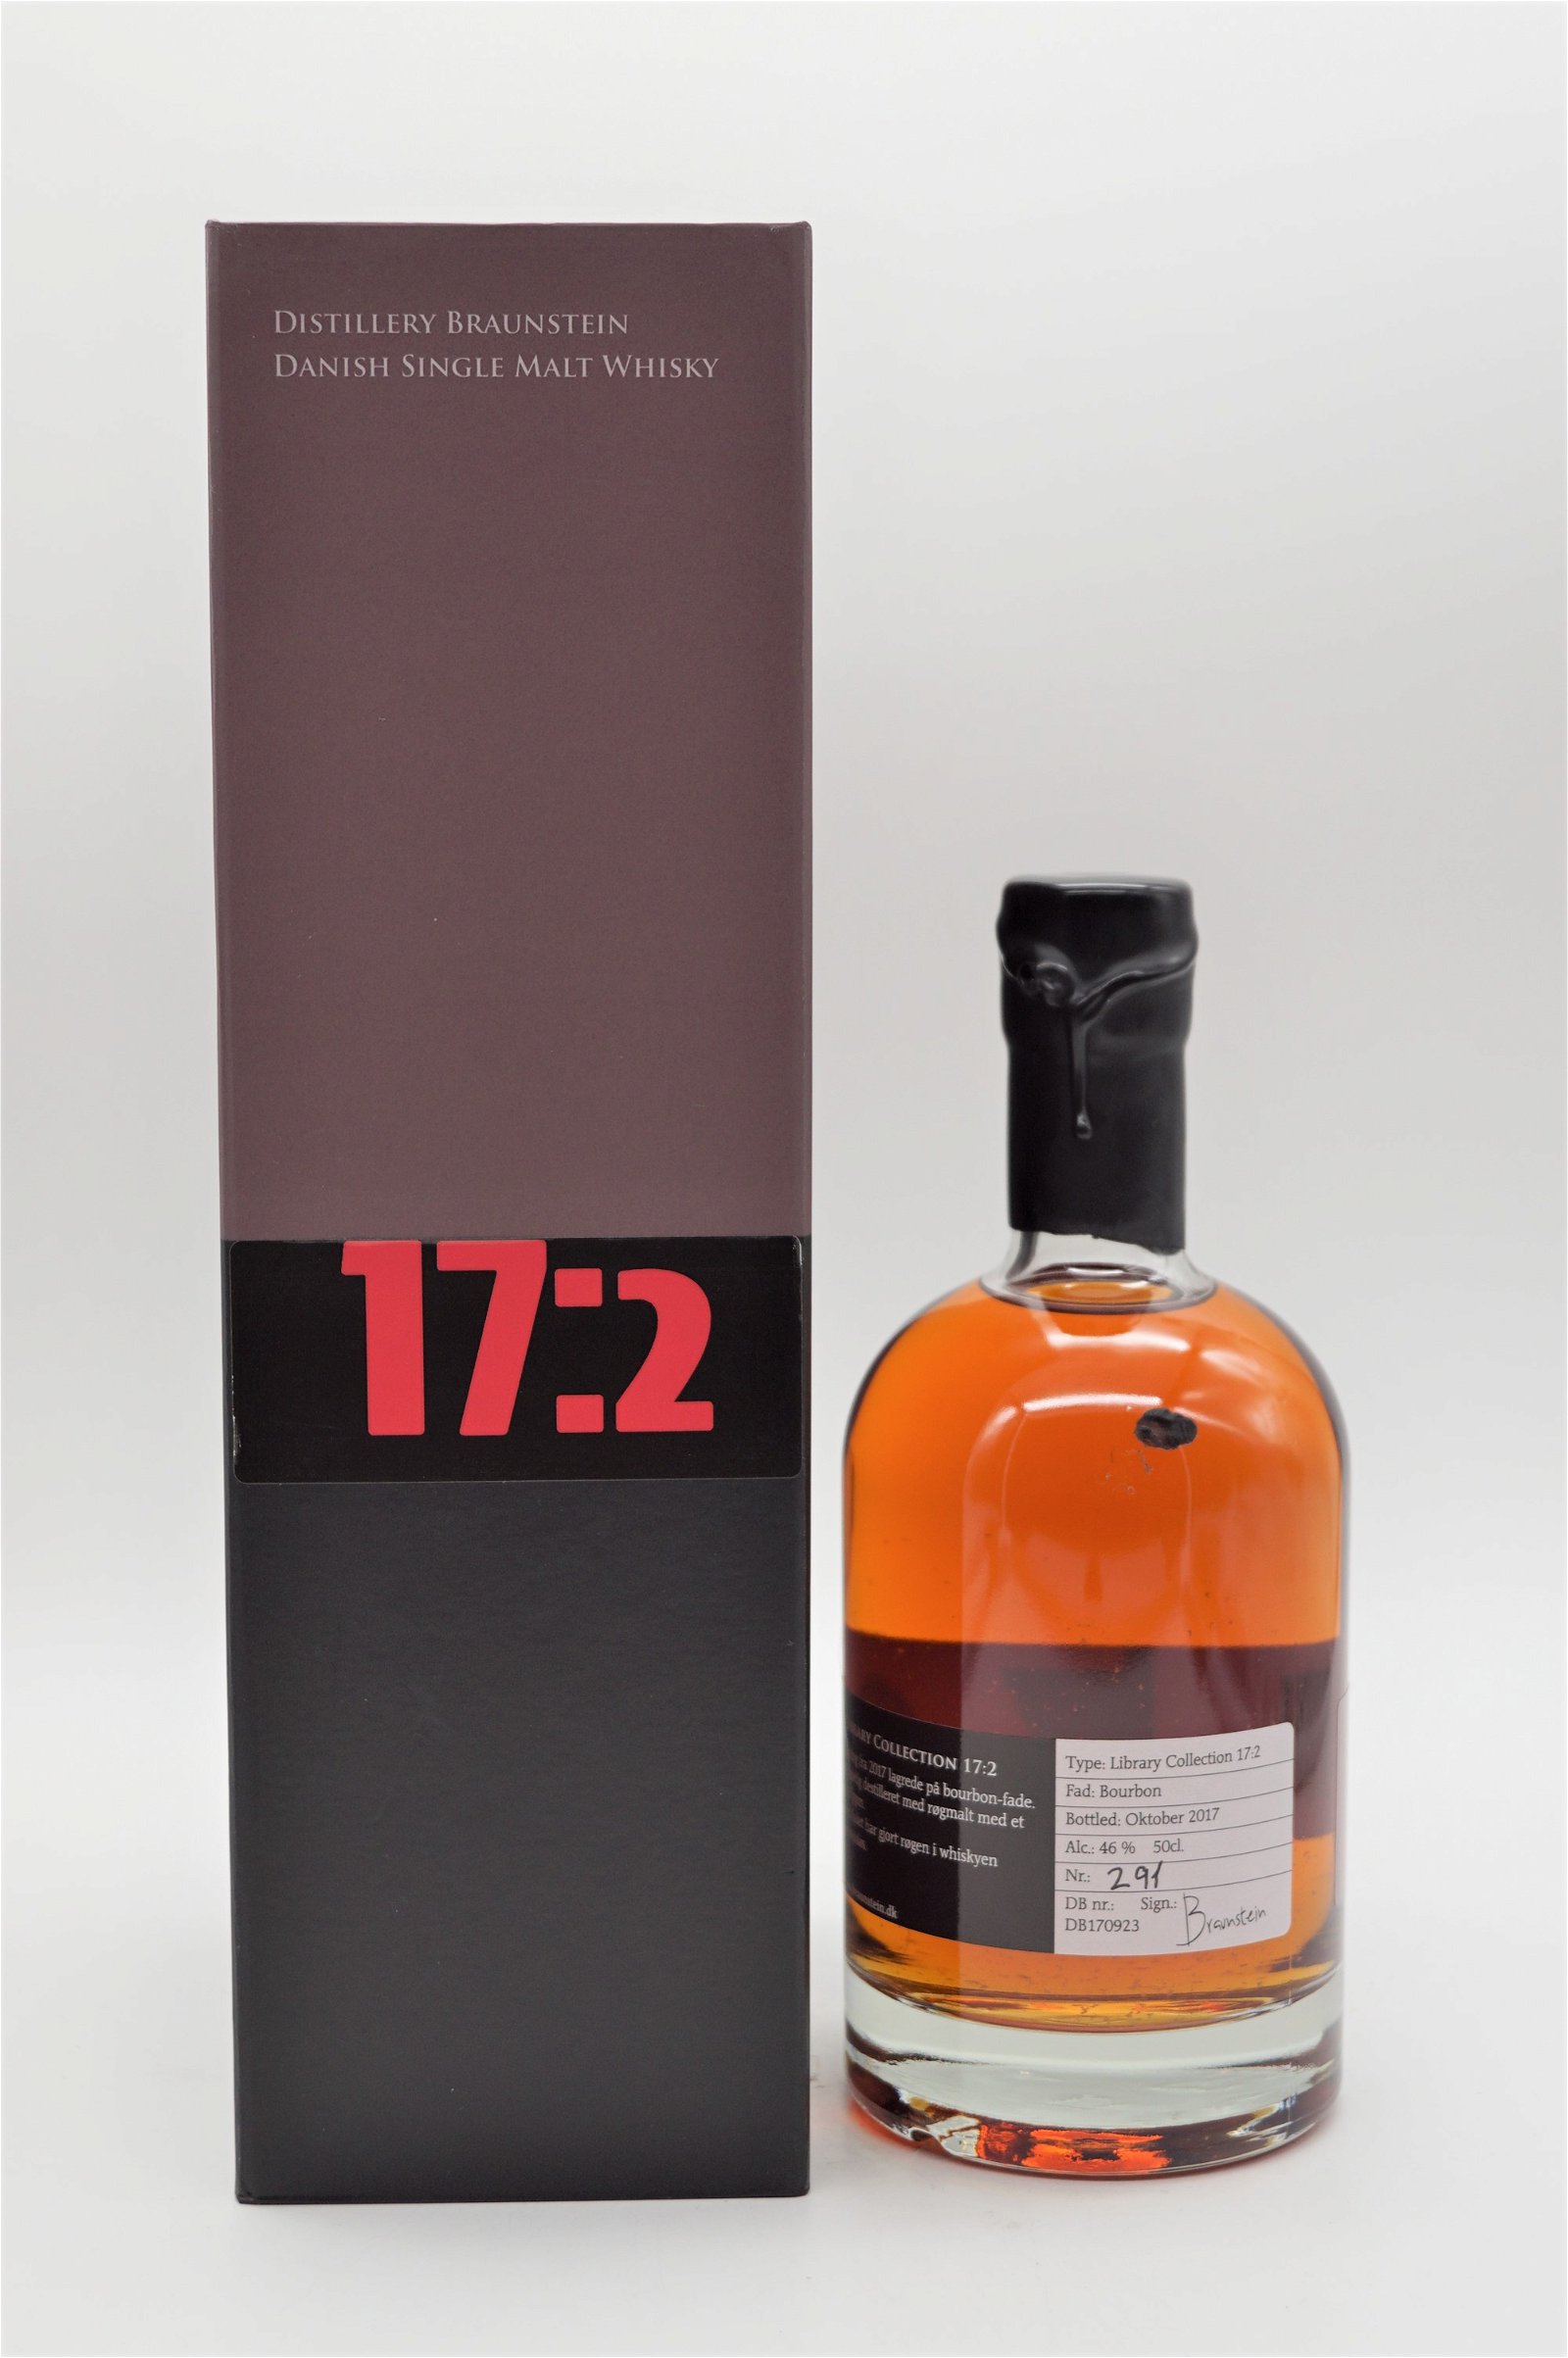 Braunstein Libary Collection 17:2 Dansk Single Malt Whisky